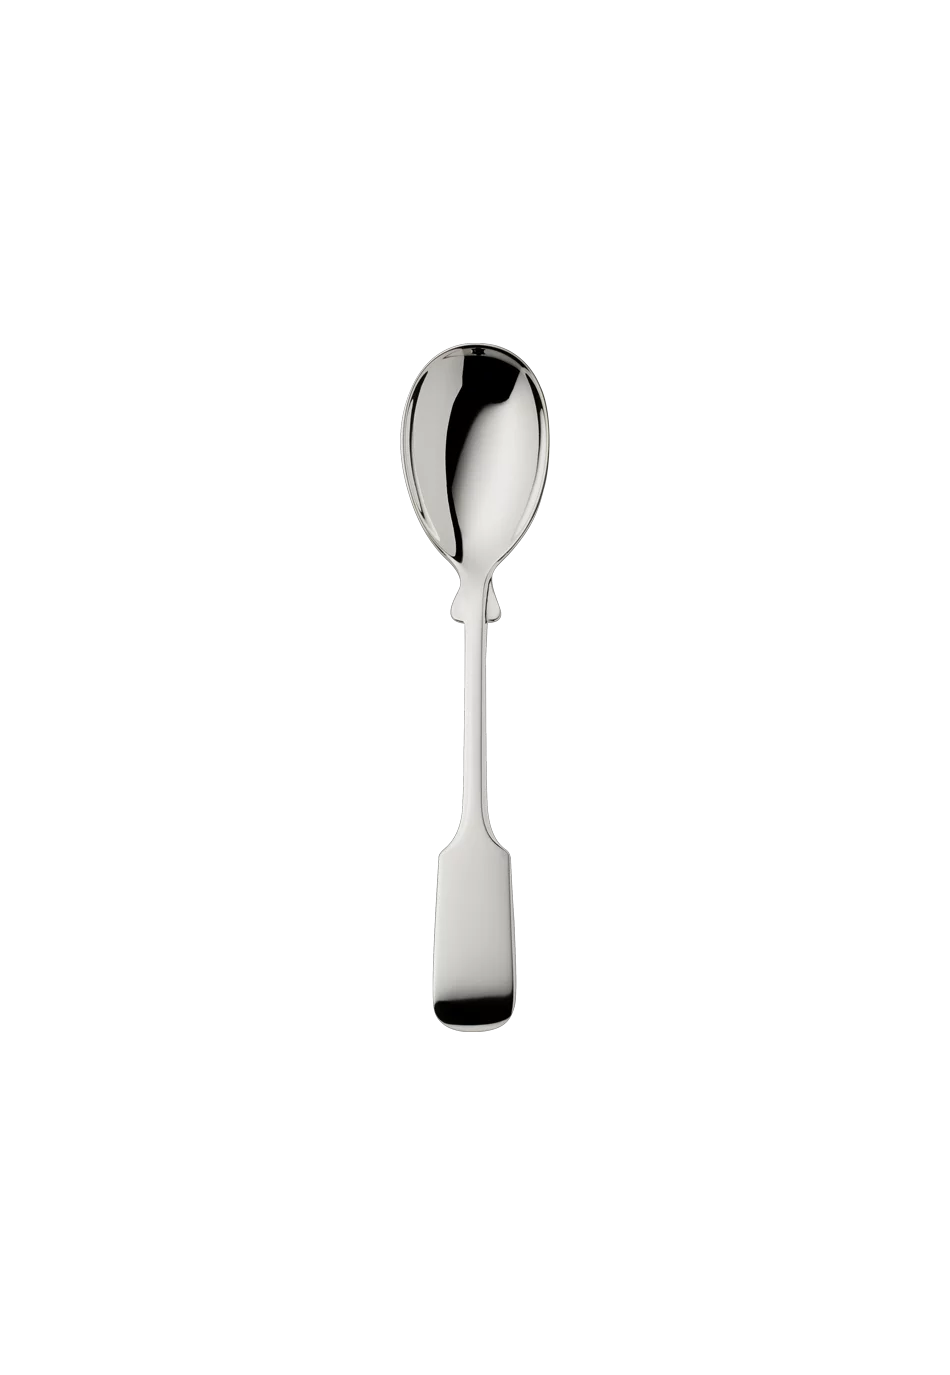 Alt-Spaten Ice-Cream Spoon (925 Sterling Silver)